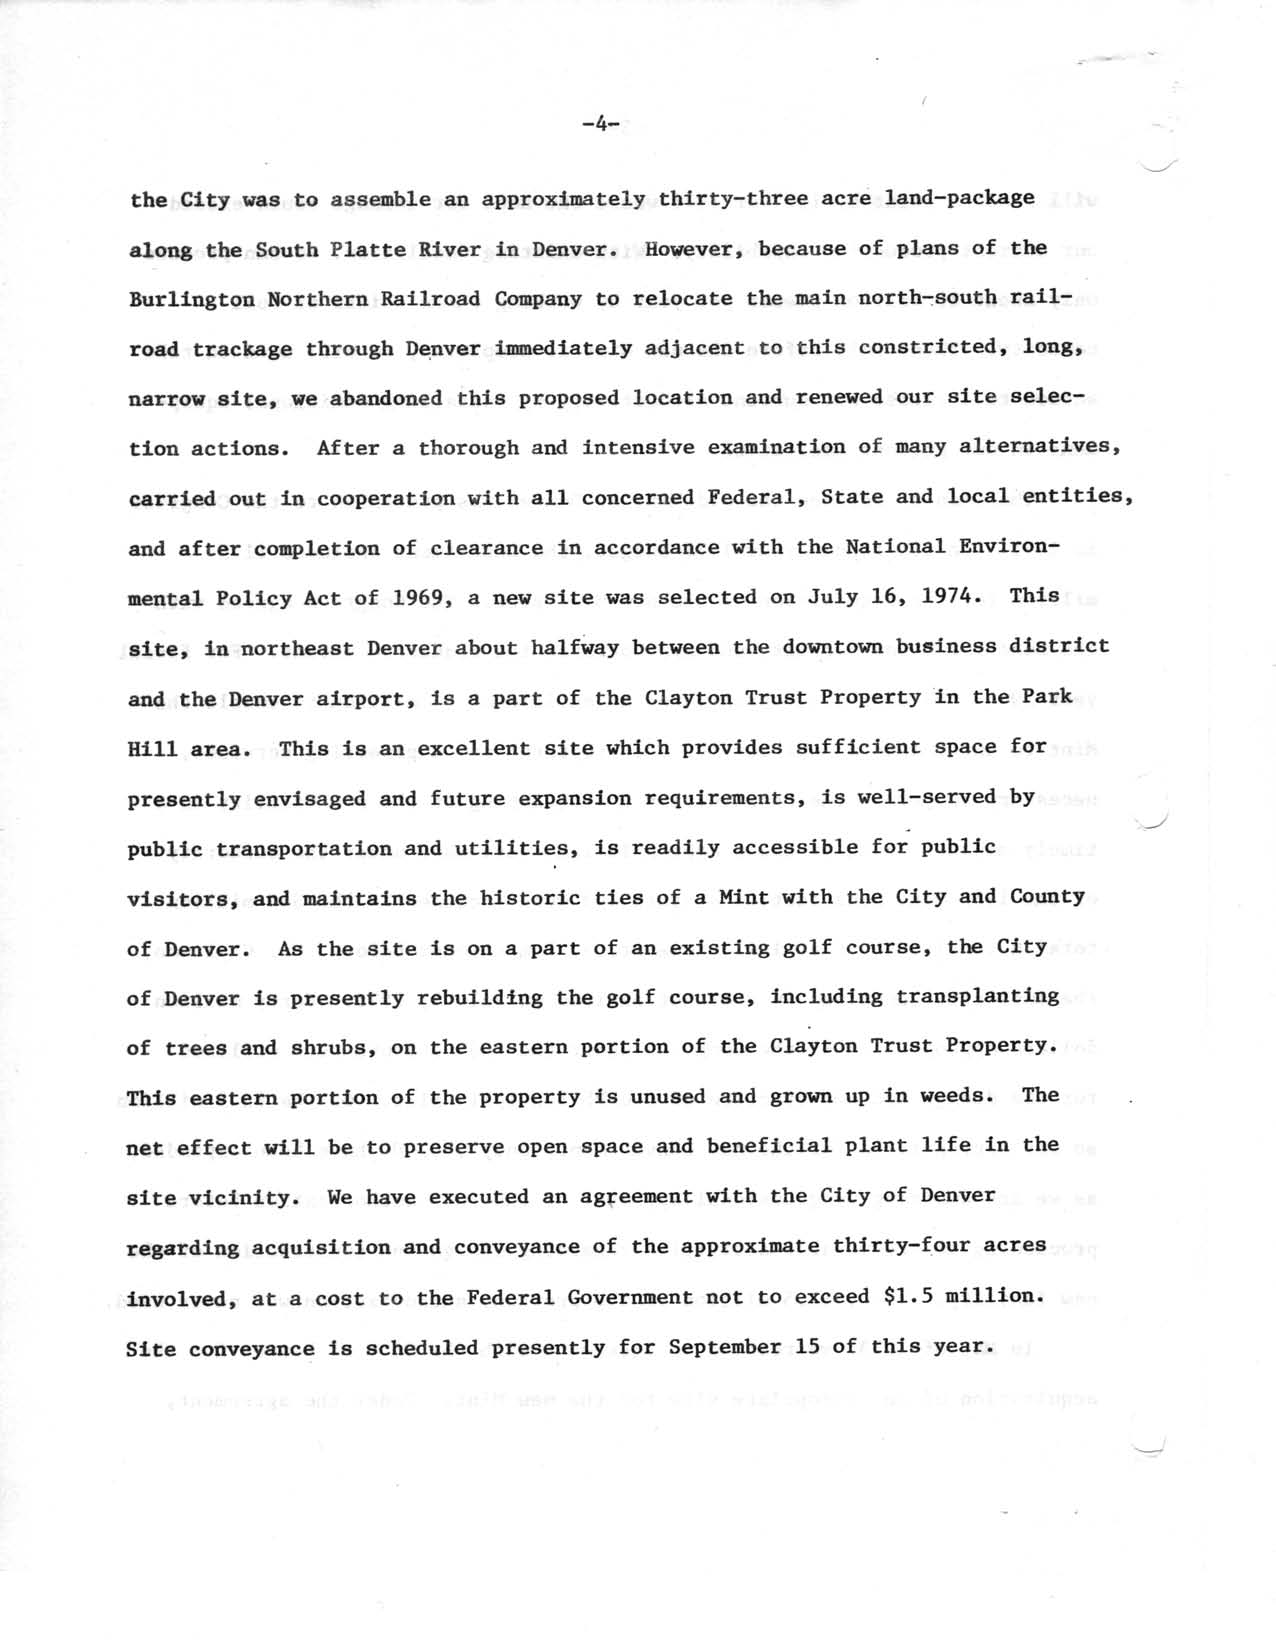 Historic Press Release: Brooks' Statement New Denver Mint, Page 4